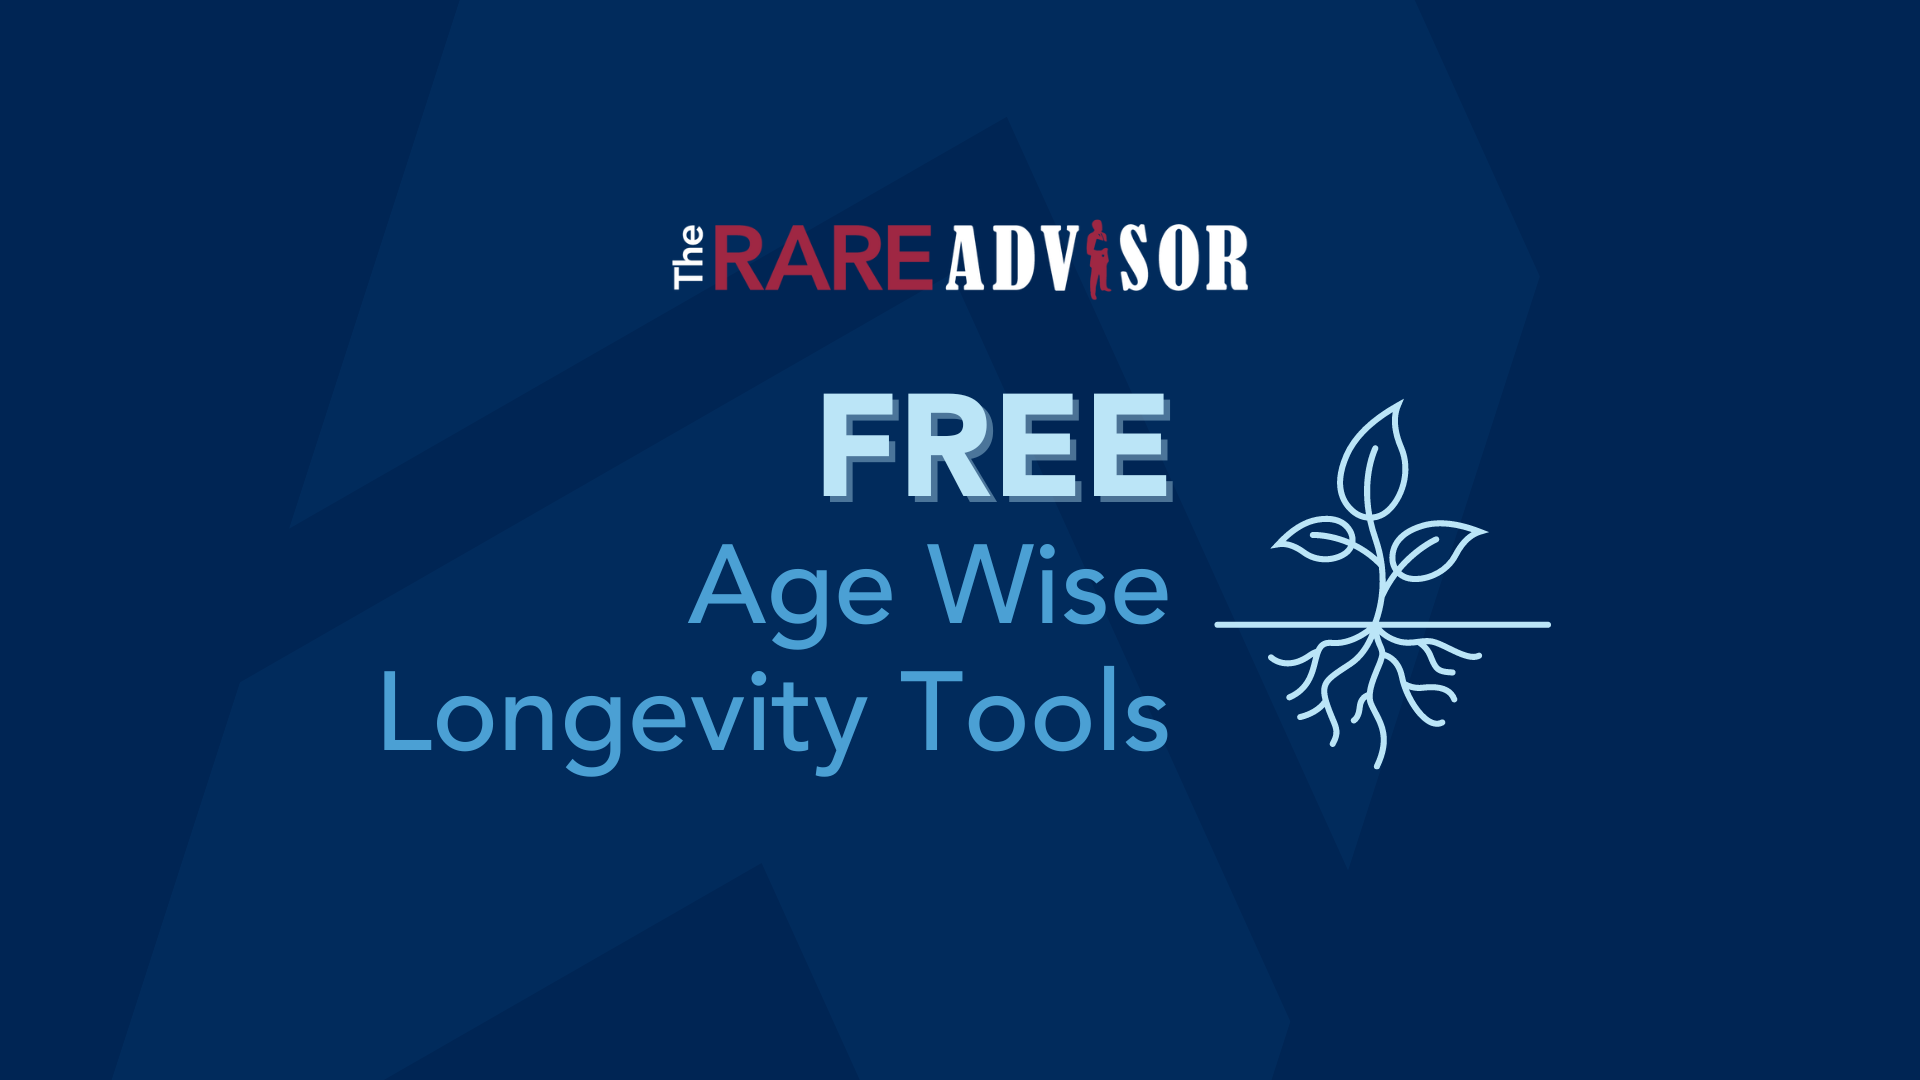 The RARE Advisor: FREE Age Wise Longevity Tools